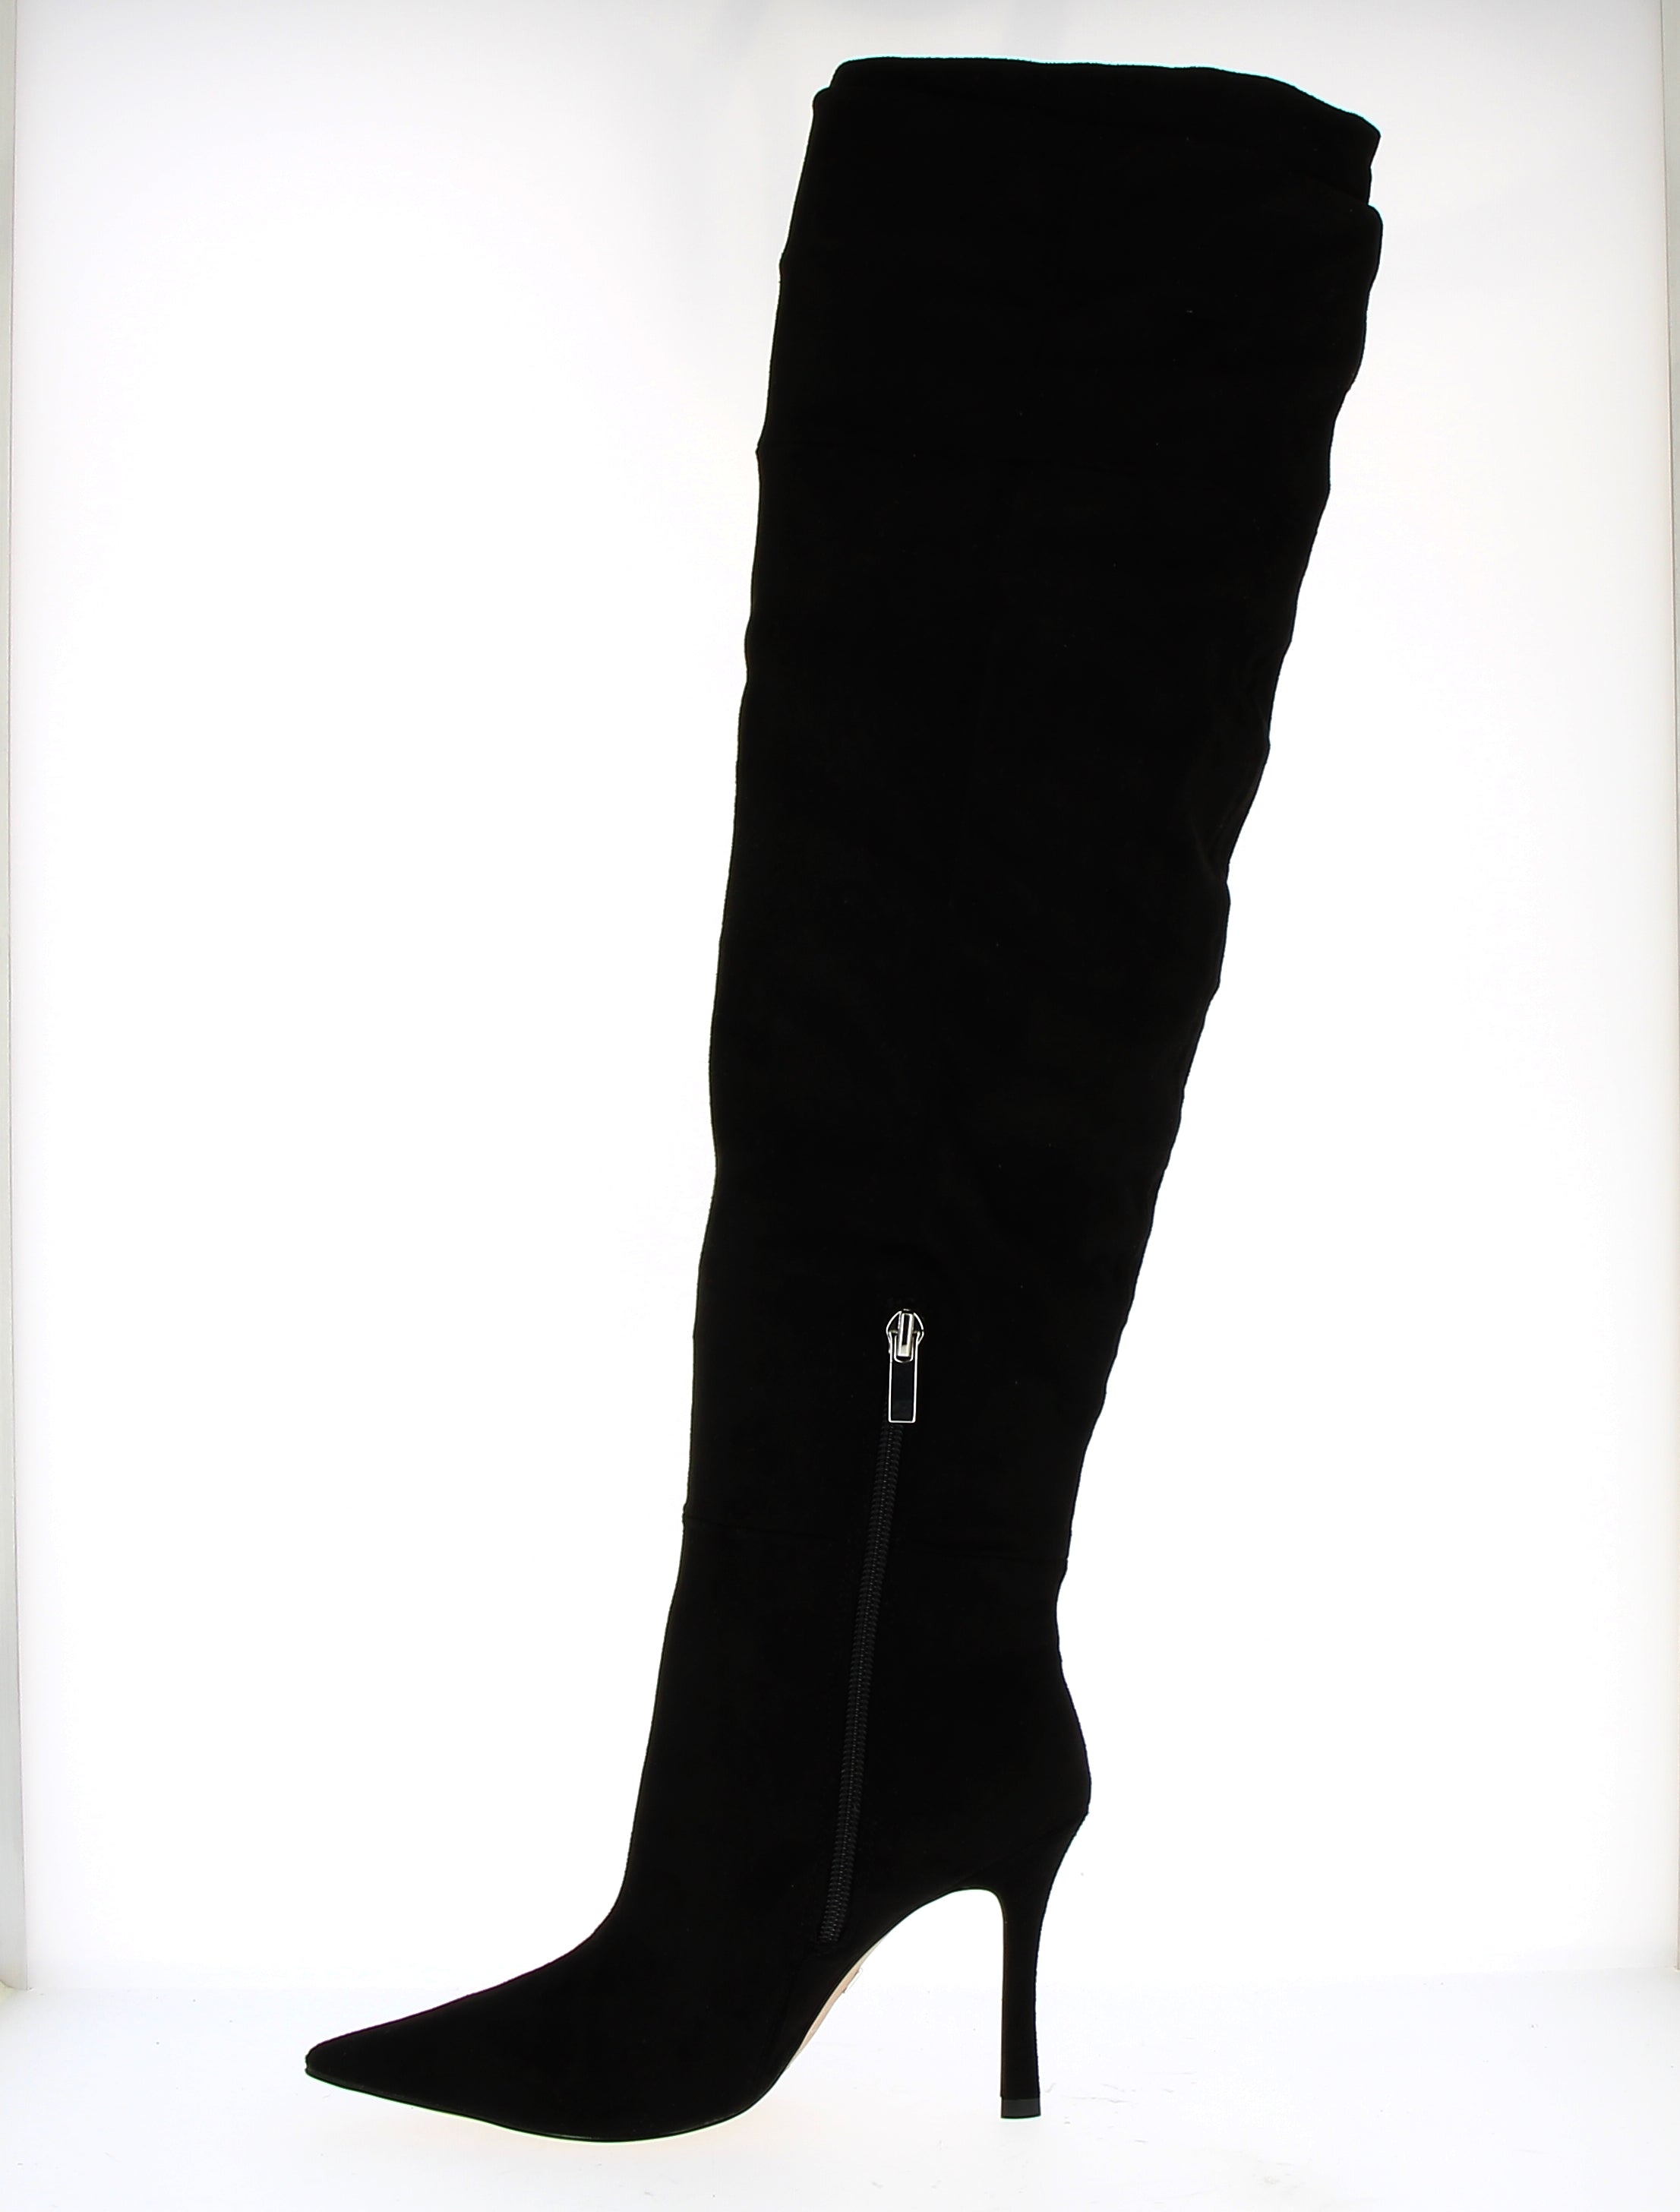 High boot above the knee in black vegan suede